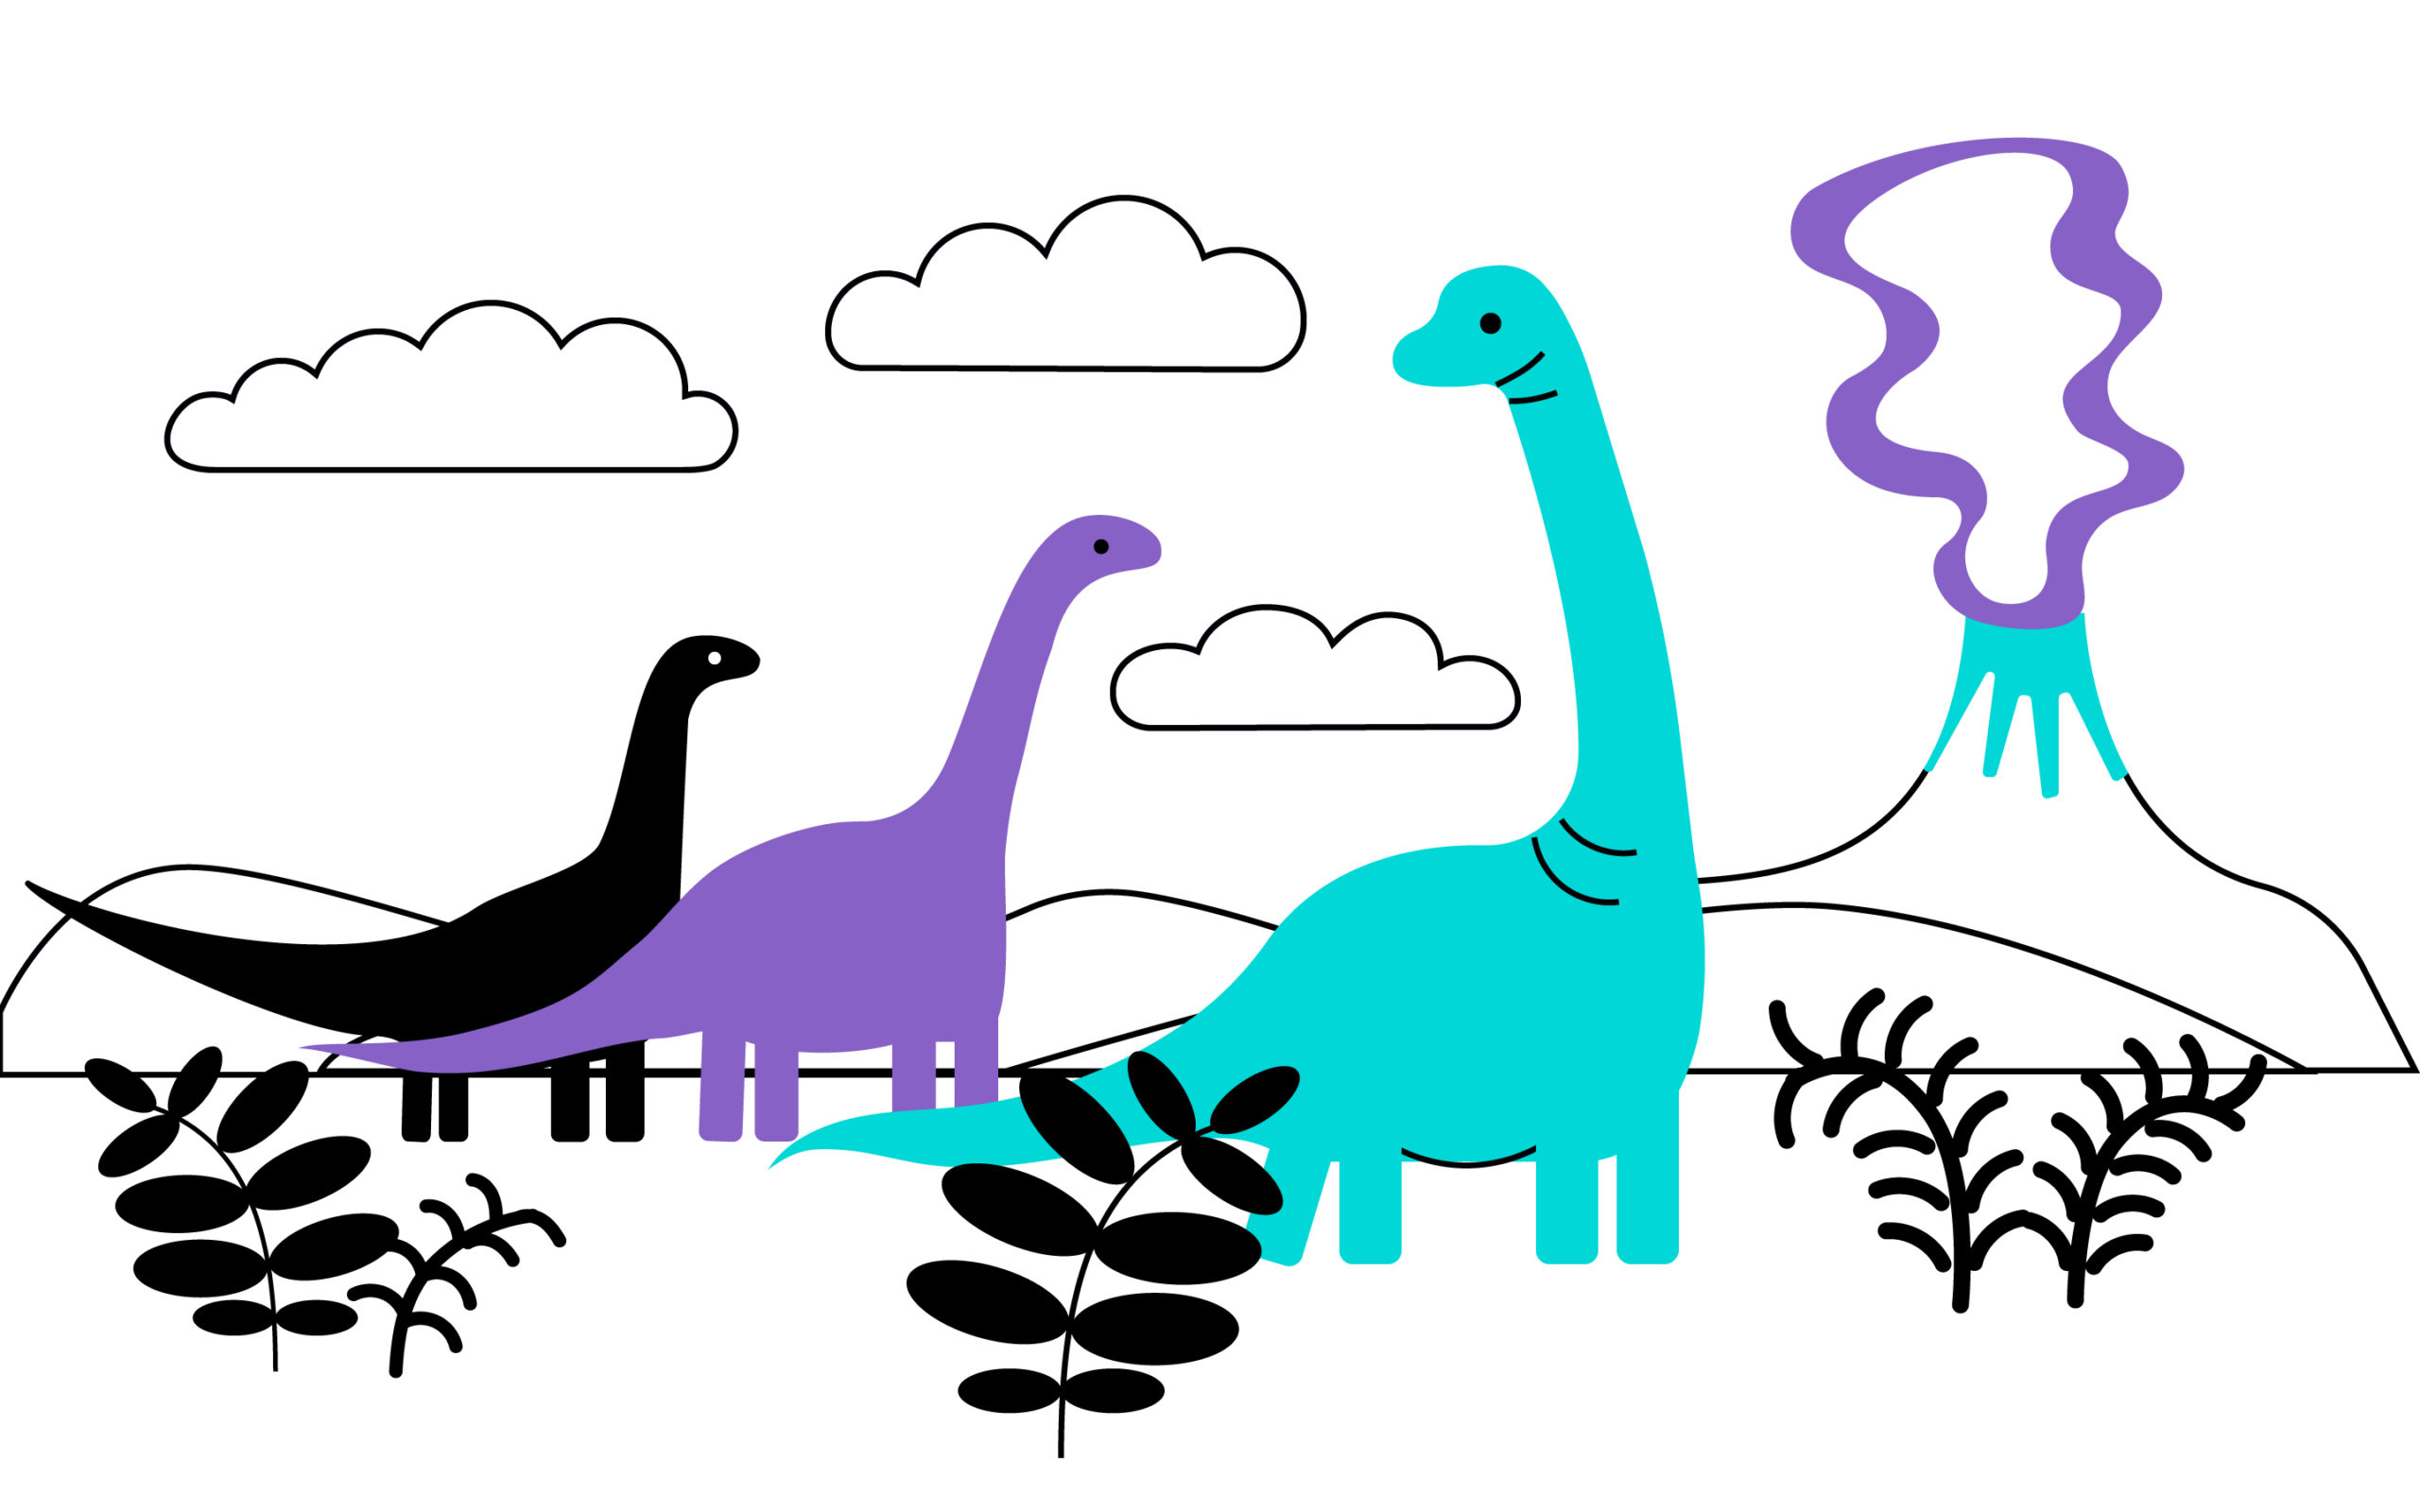 1_Dinosaurs-scene